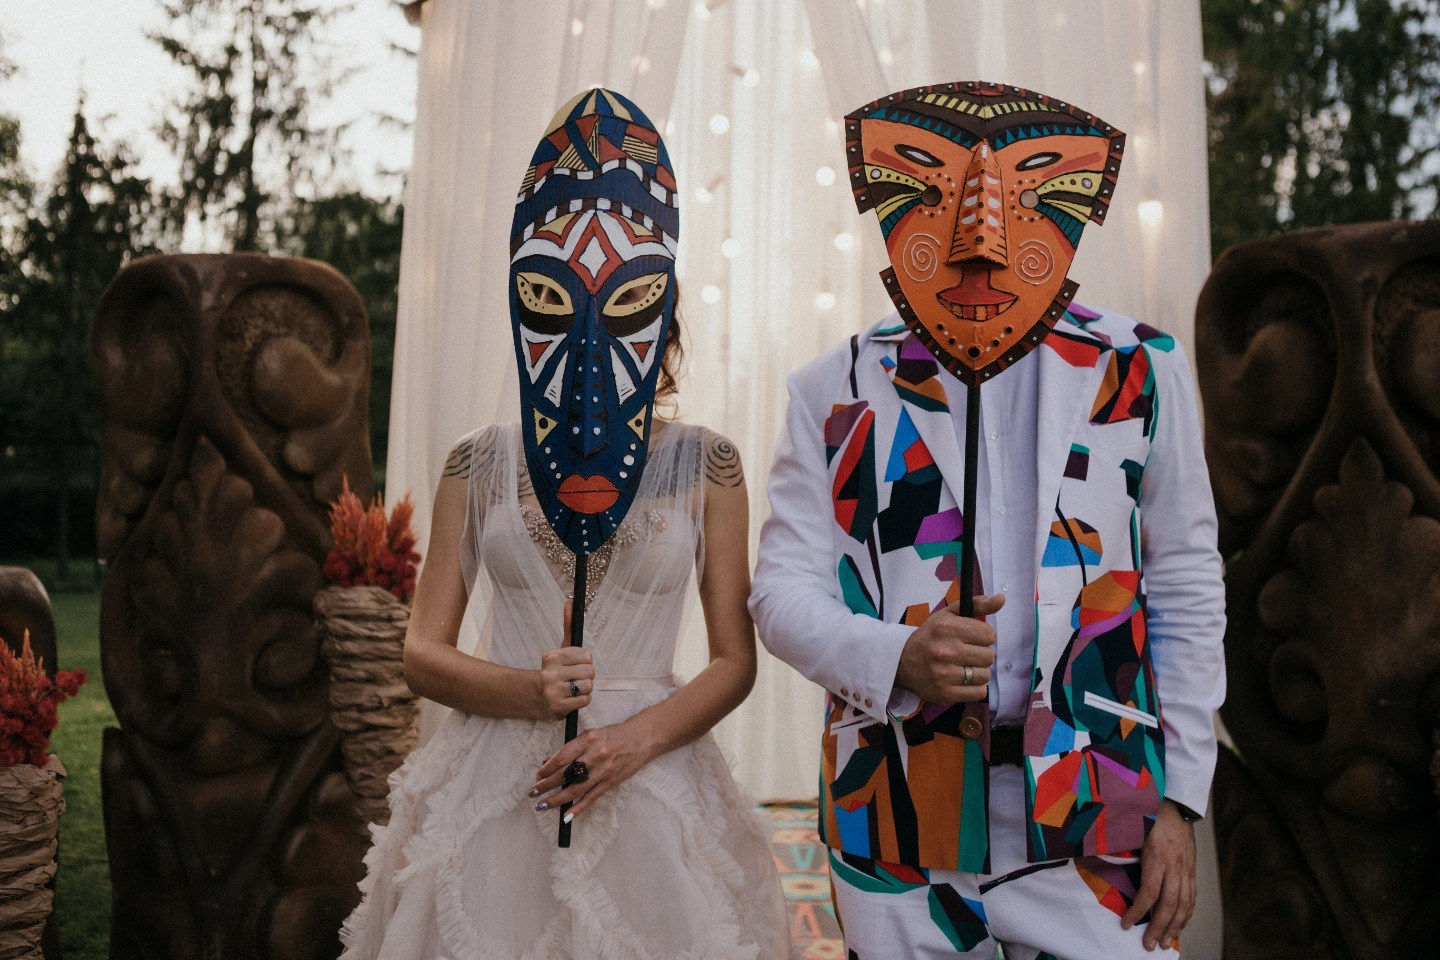 ФОТО ИЗ СТАТЬИ: Креативная свадьба с Африканскими мотивами